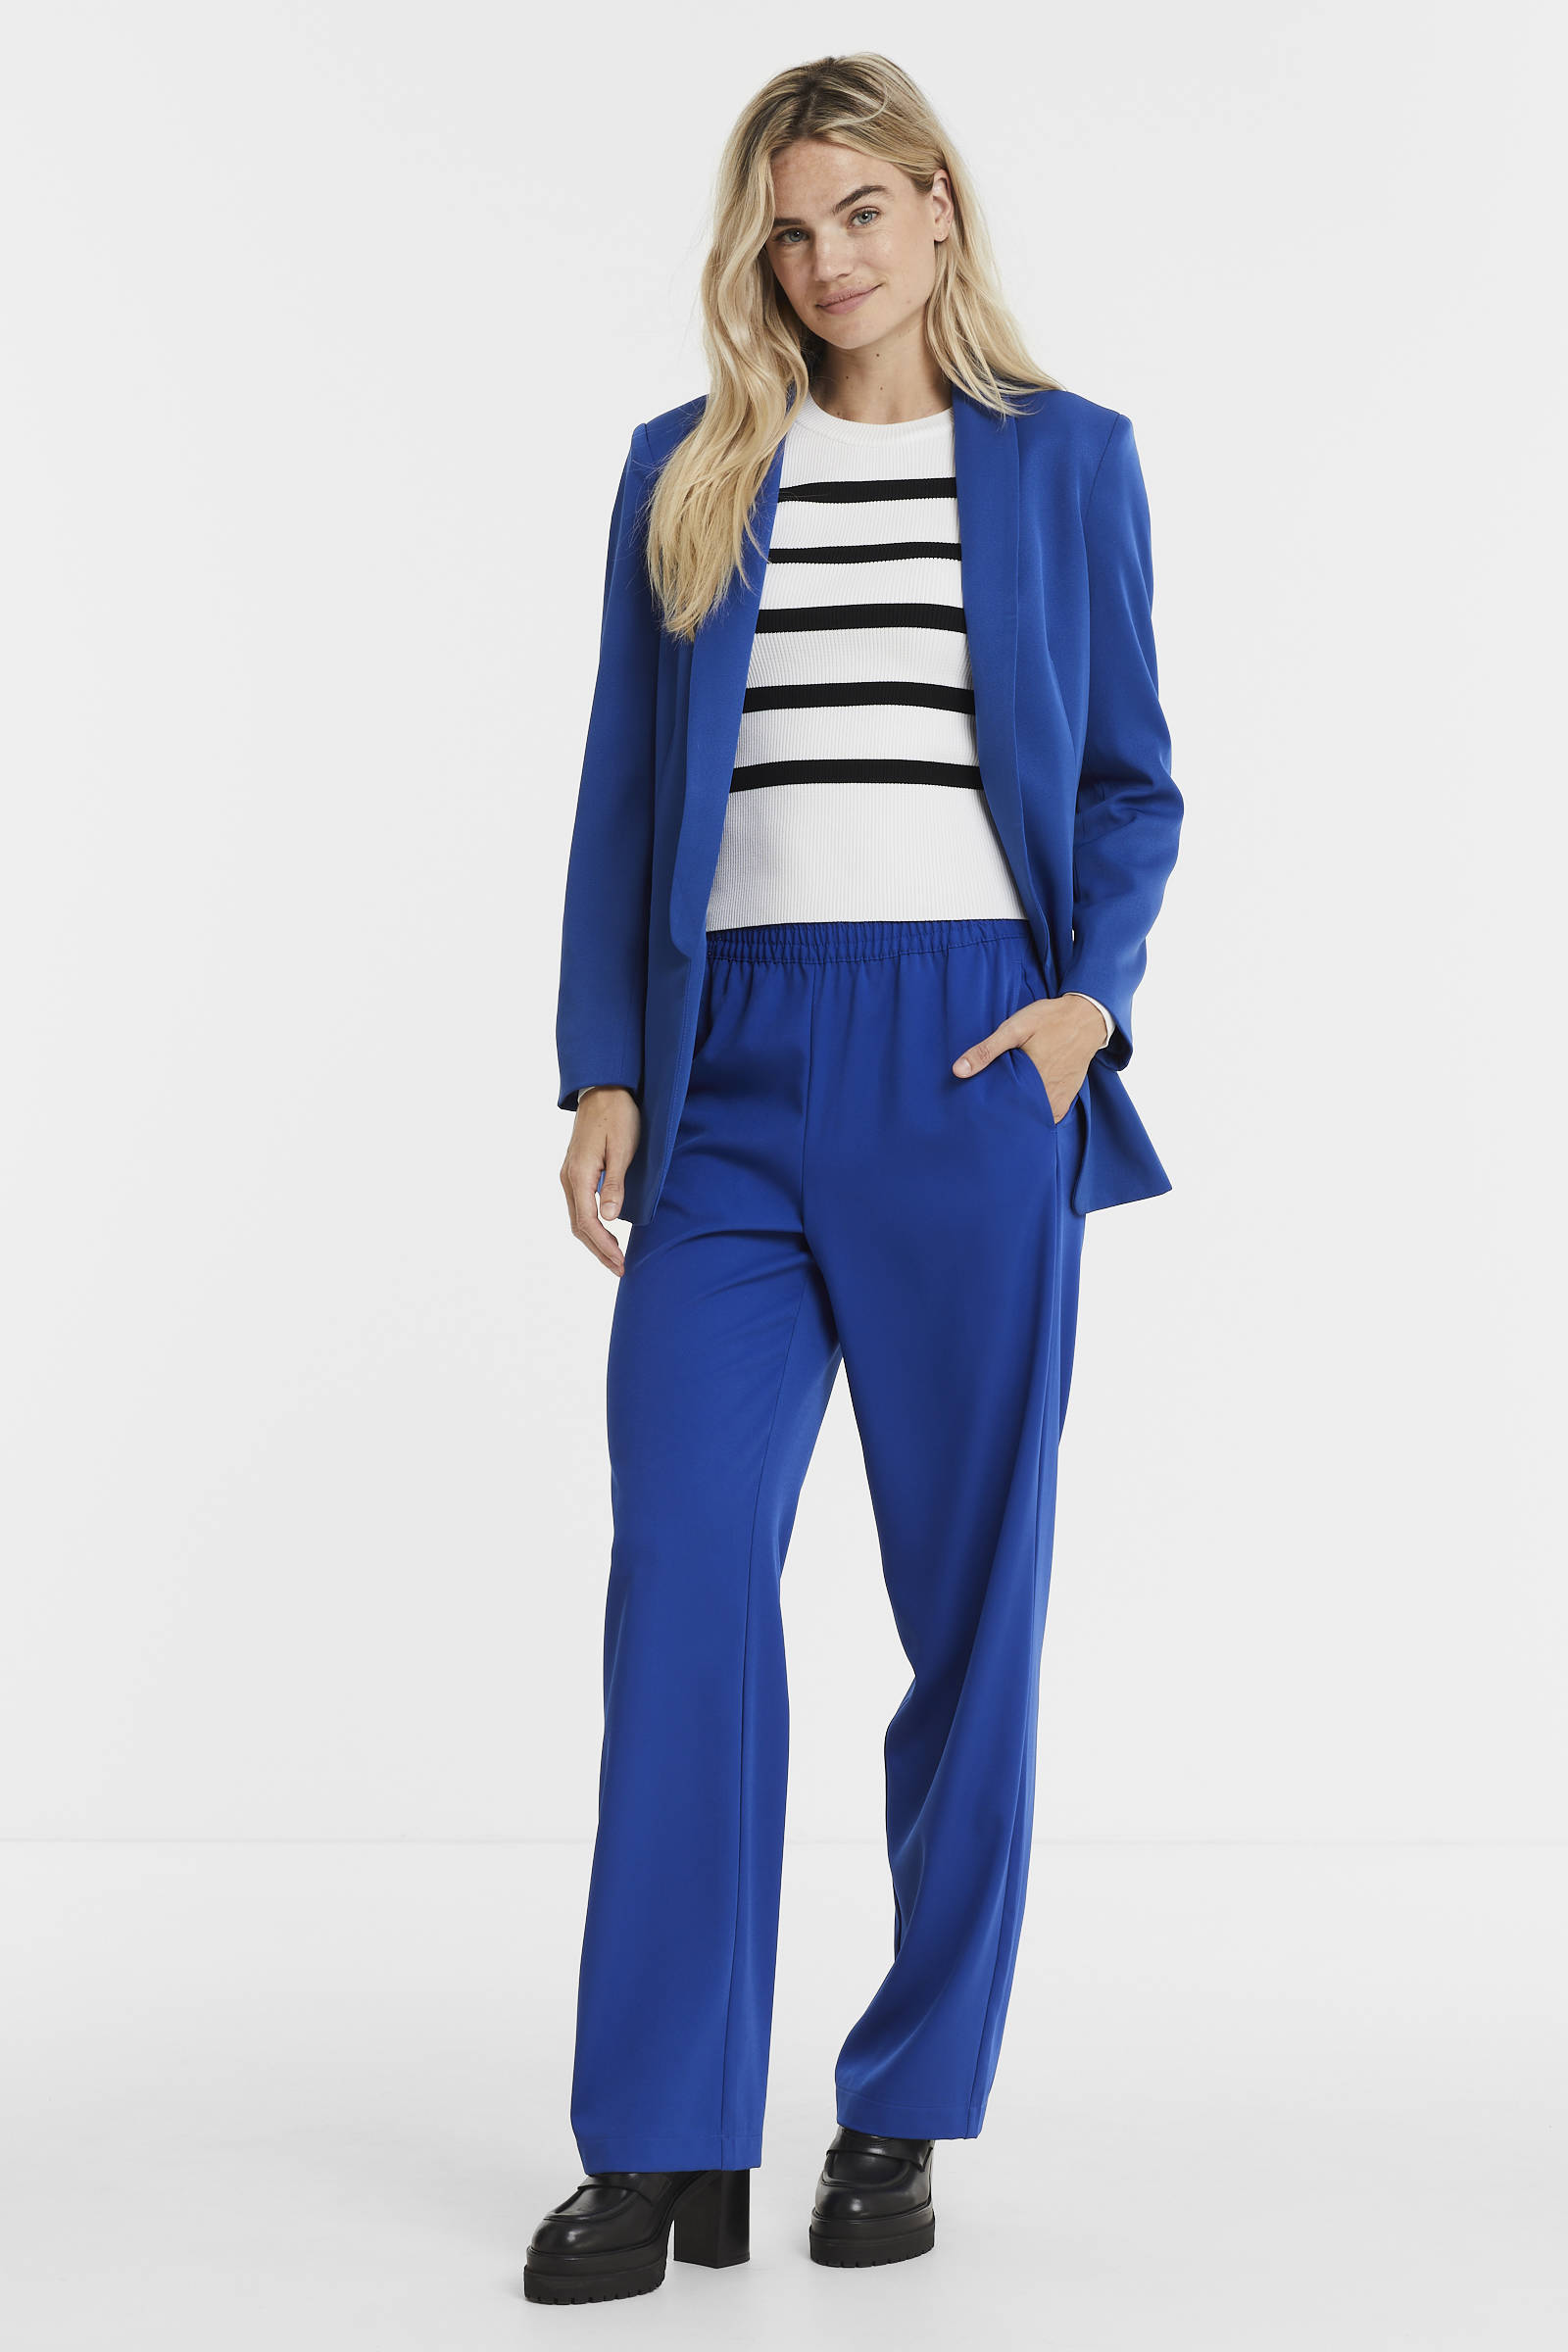 Vero Moda Unisex blazer donkerblauw-azuur gestreept patroon zakelijke stijl Mode Blazers Unisex blazers 